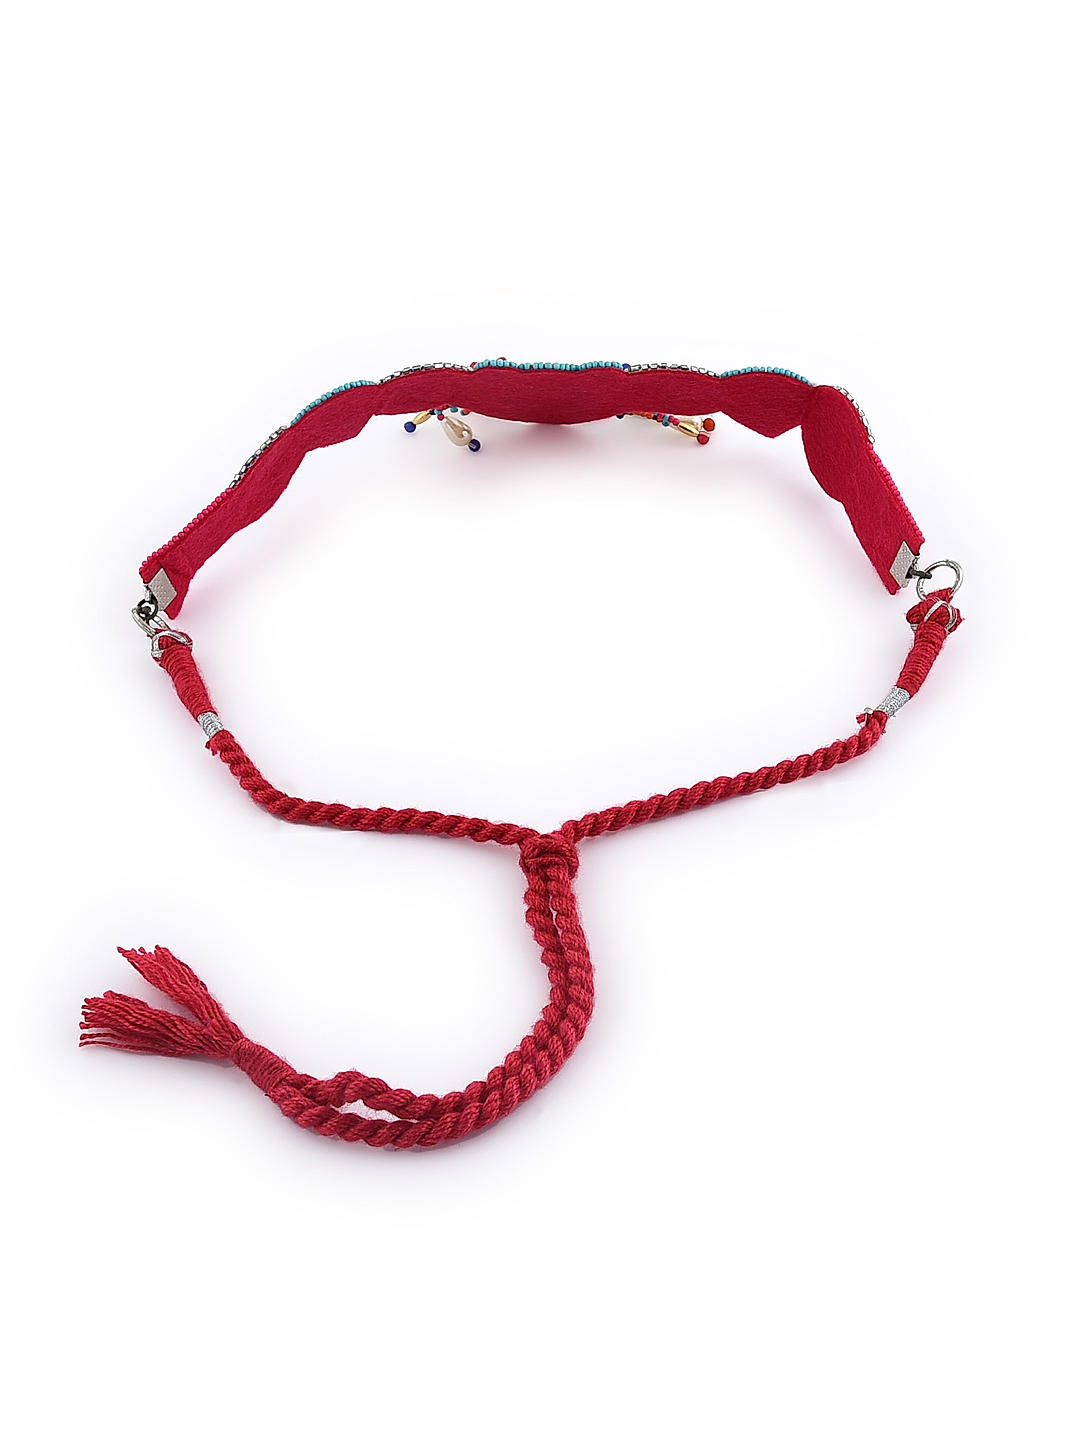 Dog Necklaces | Dog collar diy tutorials, Dog necklace, Dog jewelry collar